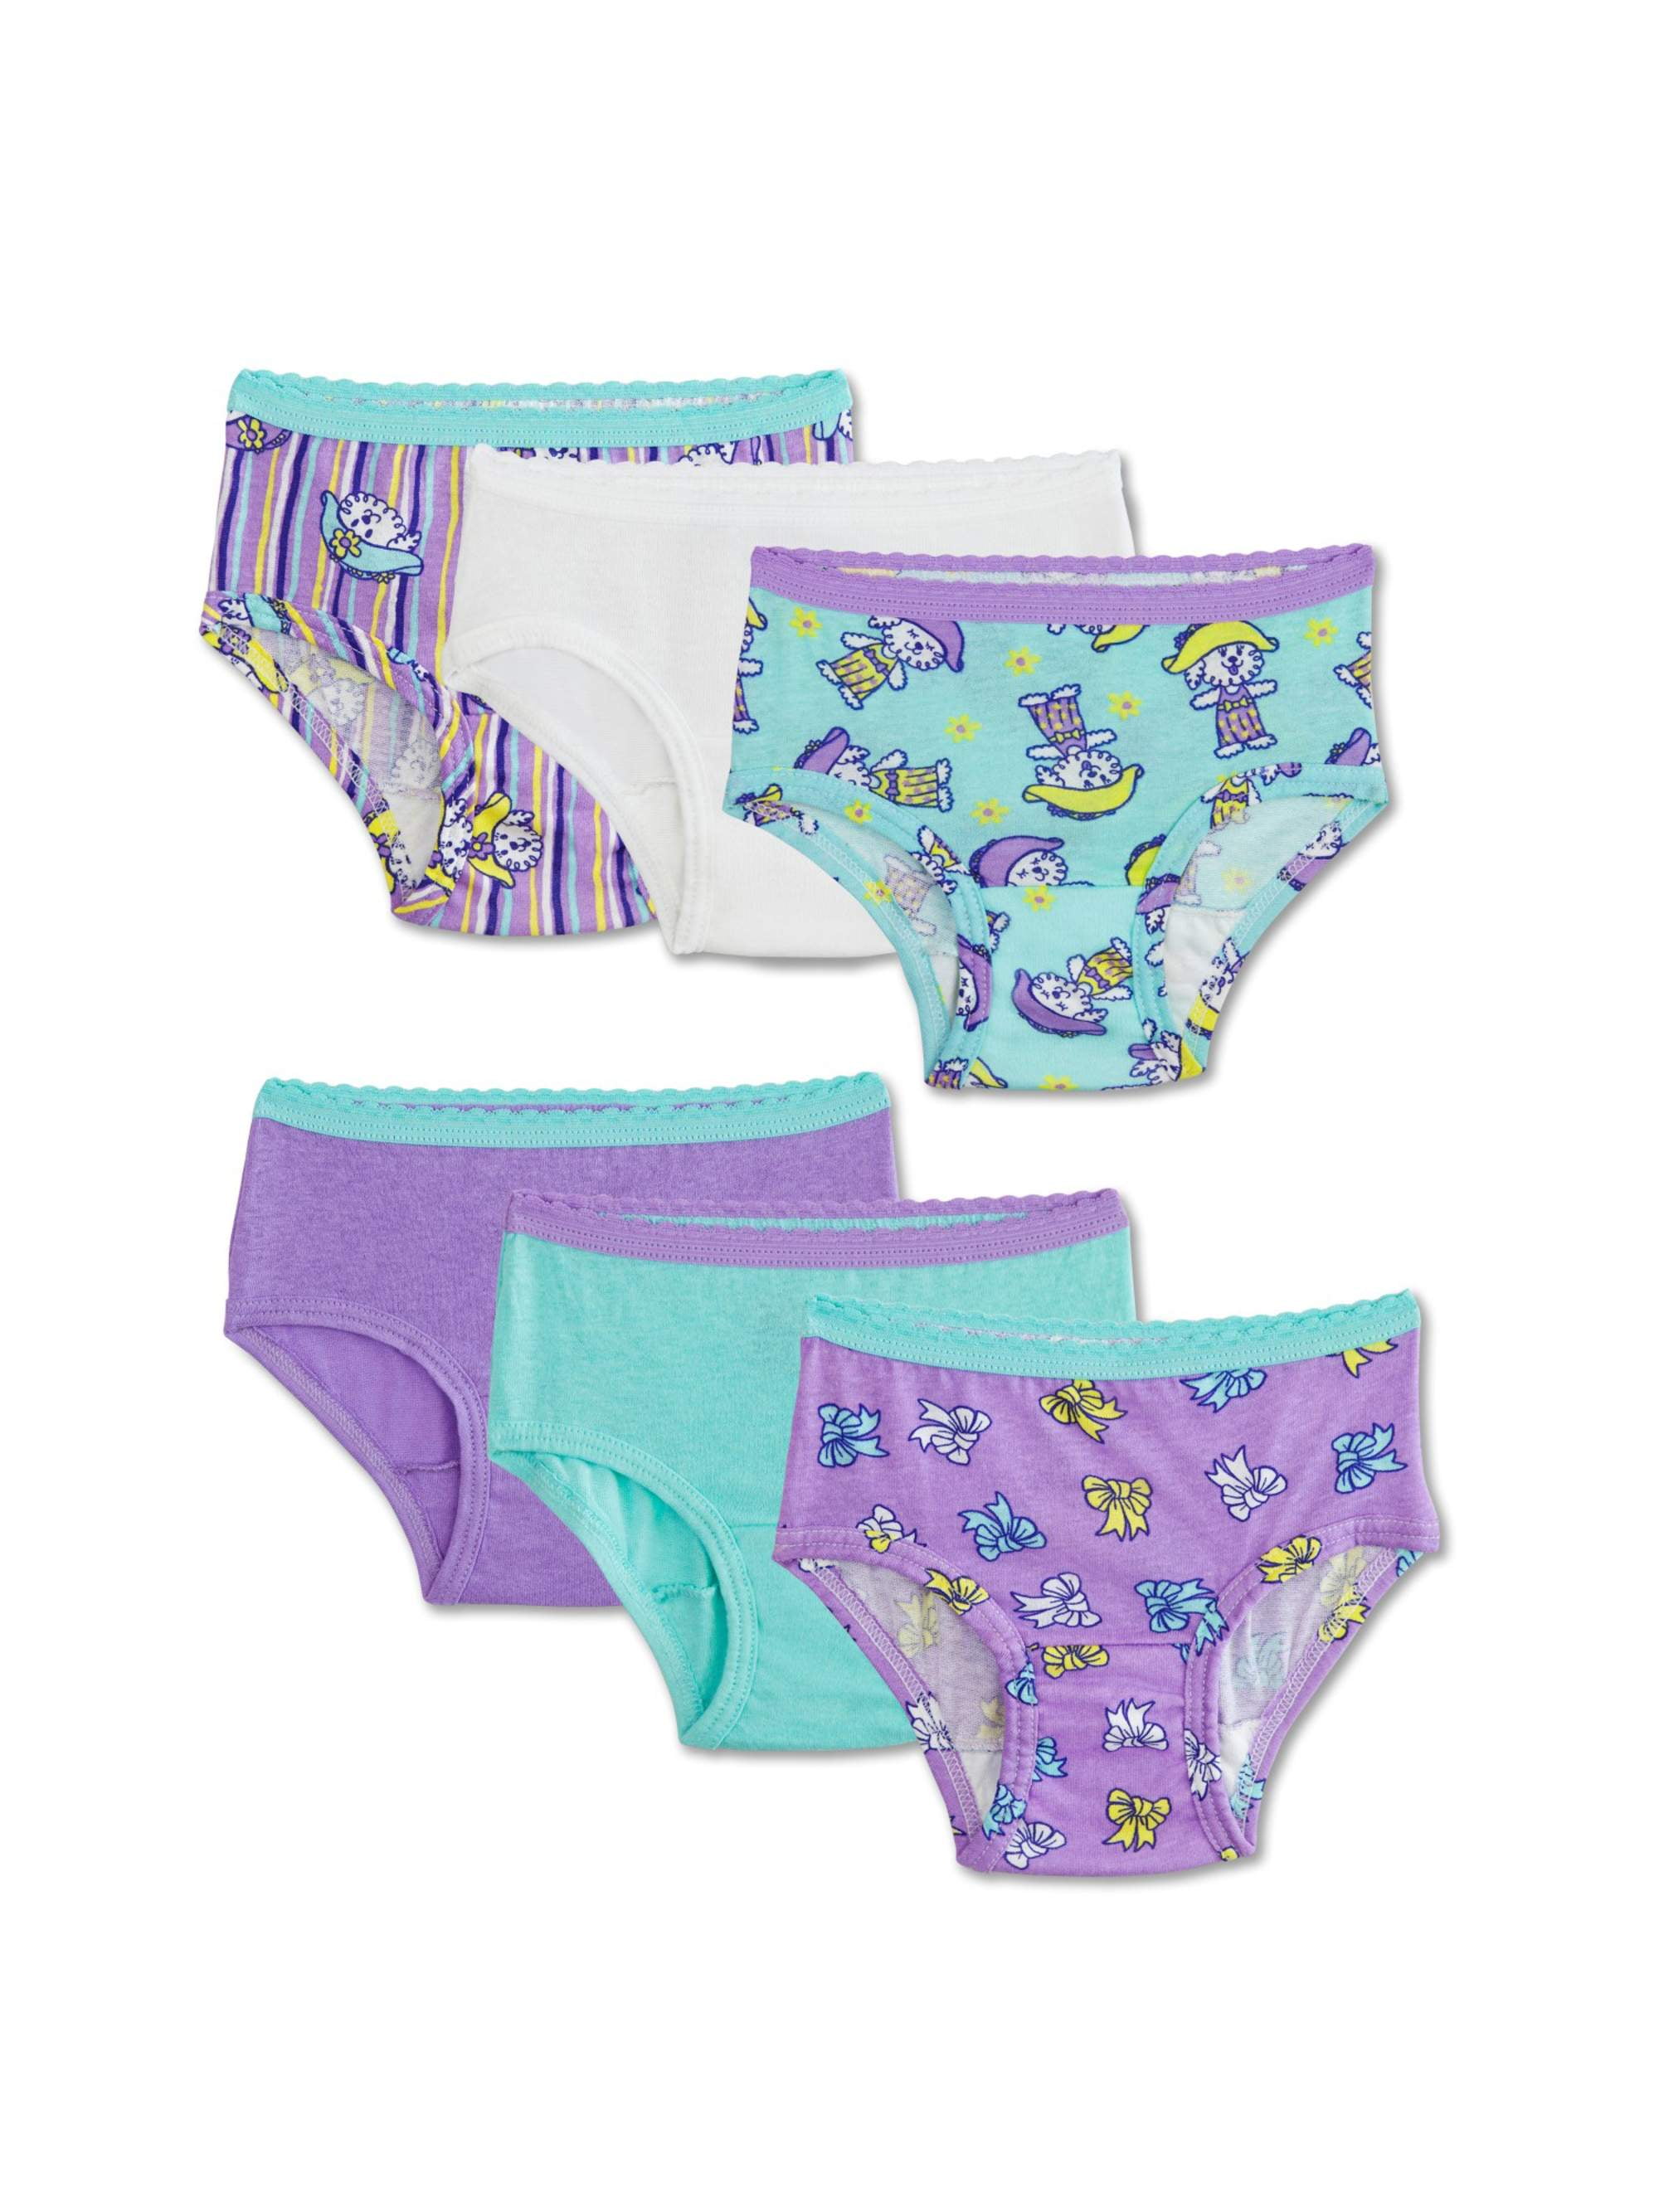 Auranso Baby Girls Knickers Underwear 6 Pack Striped Flower Pattern Toddler Girl Panties Cotton Kids Briefs Underpants 2-7 Years 